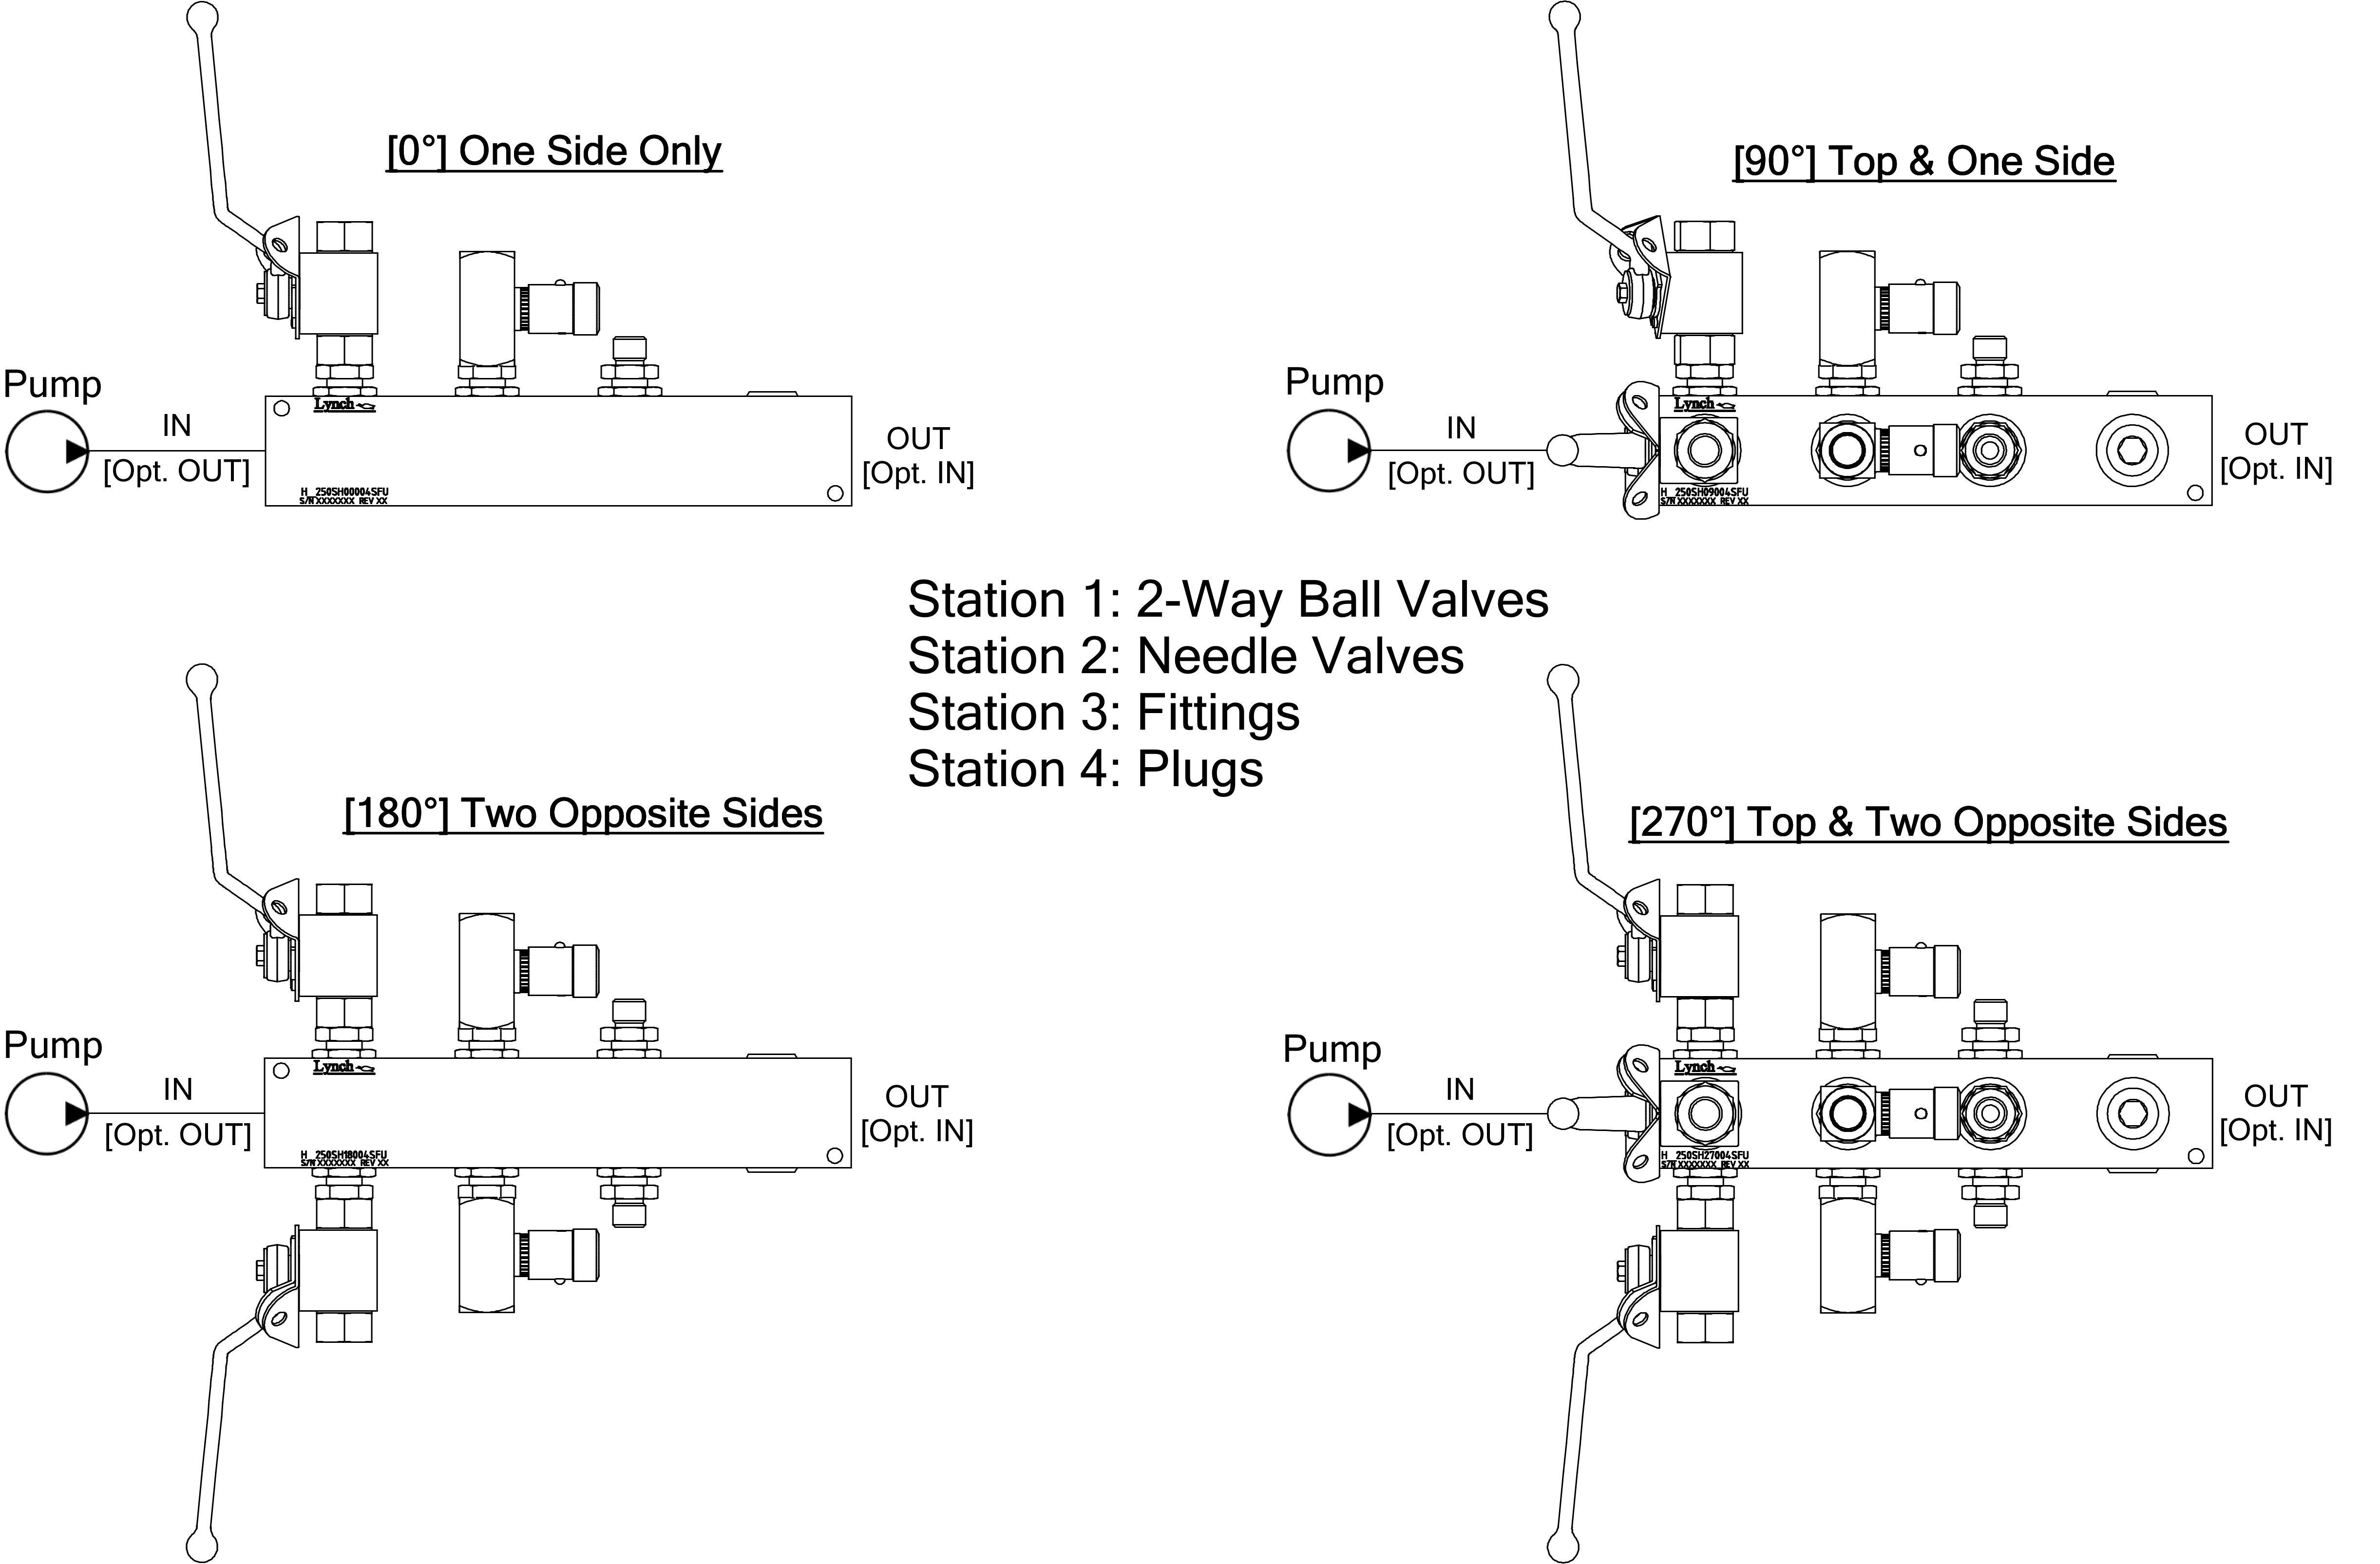 Header and Junction block diagram